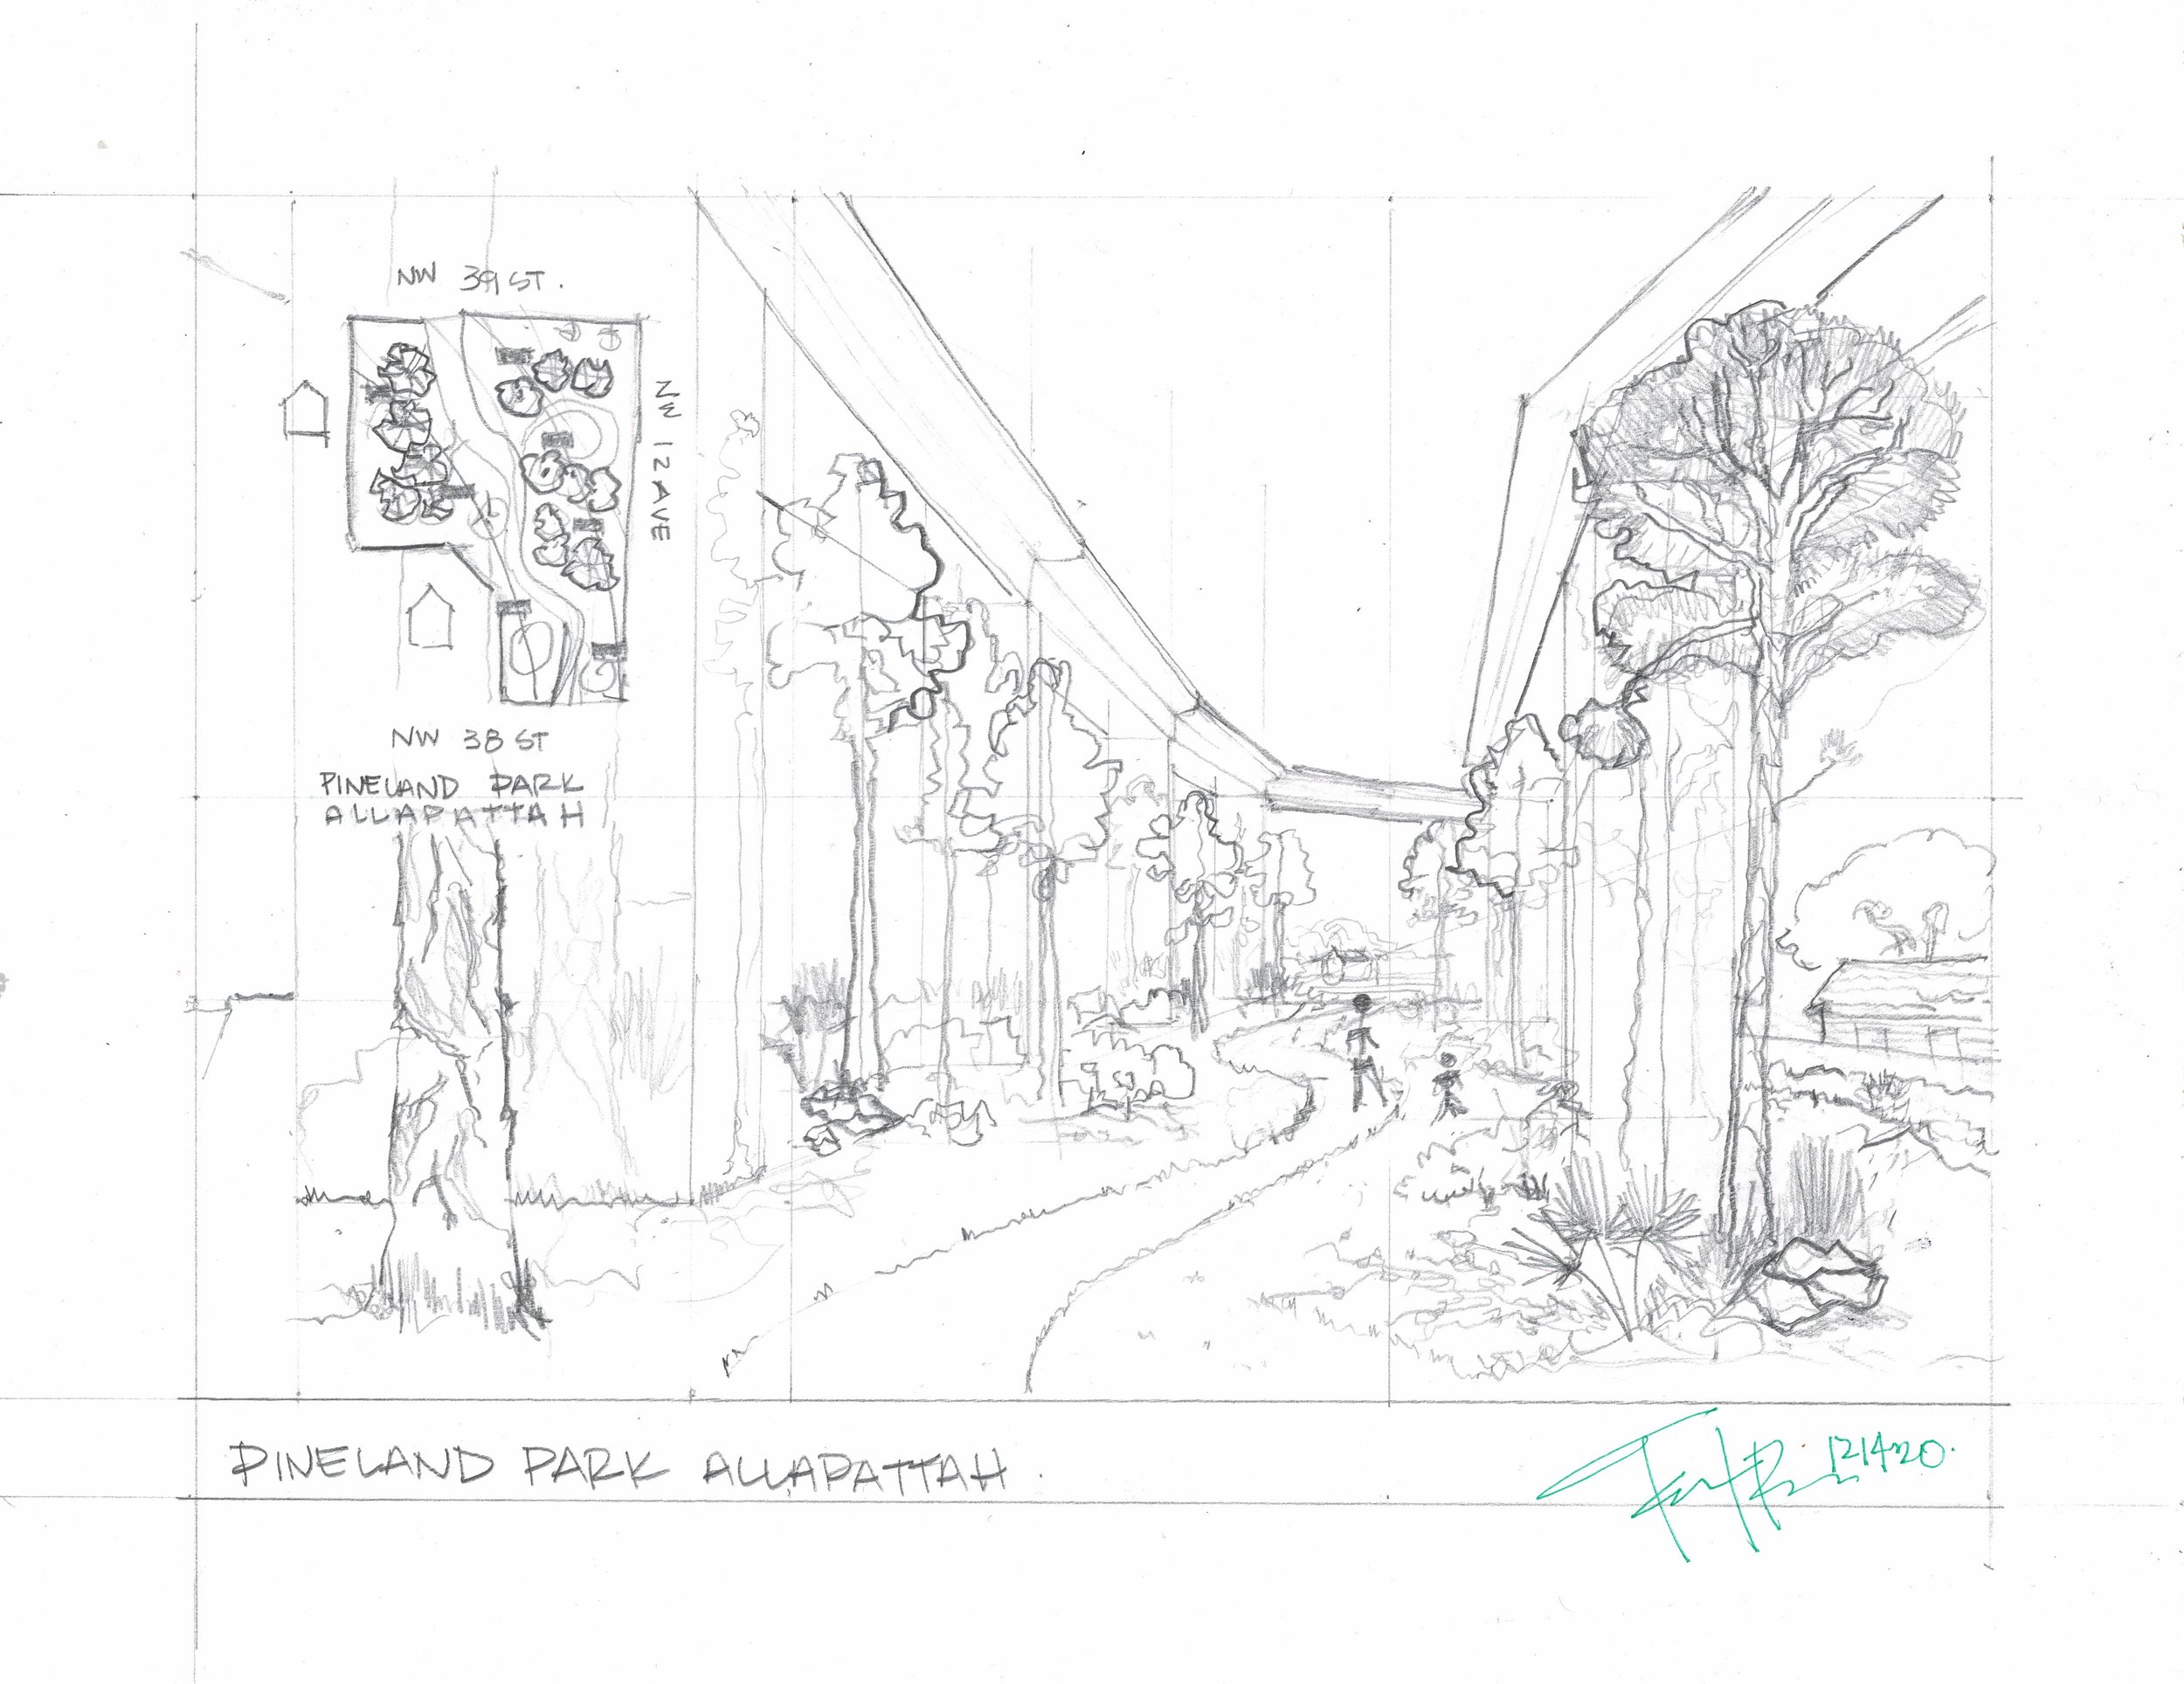 1214 - Pineland Park Allapattah Metro Sketch.jpg